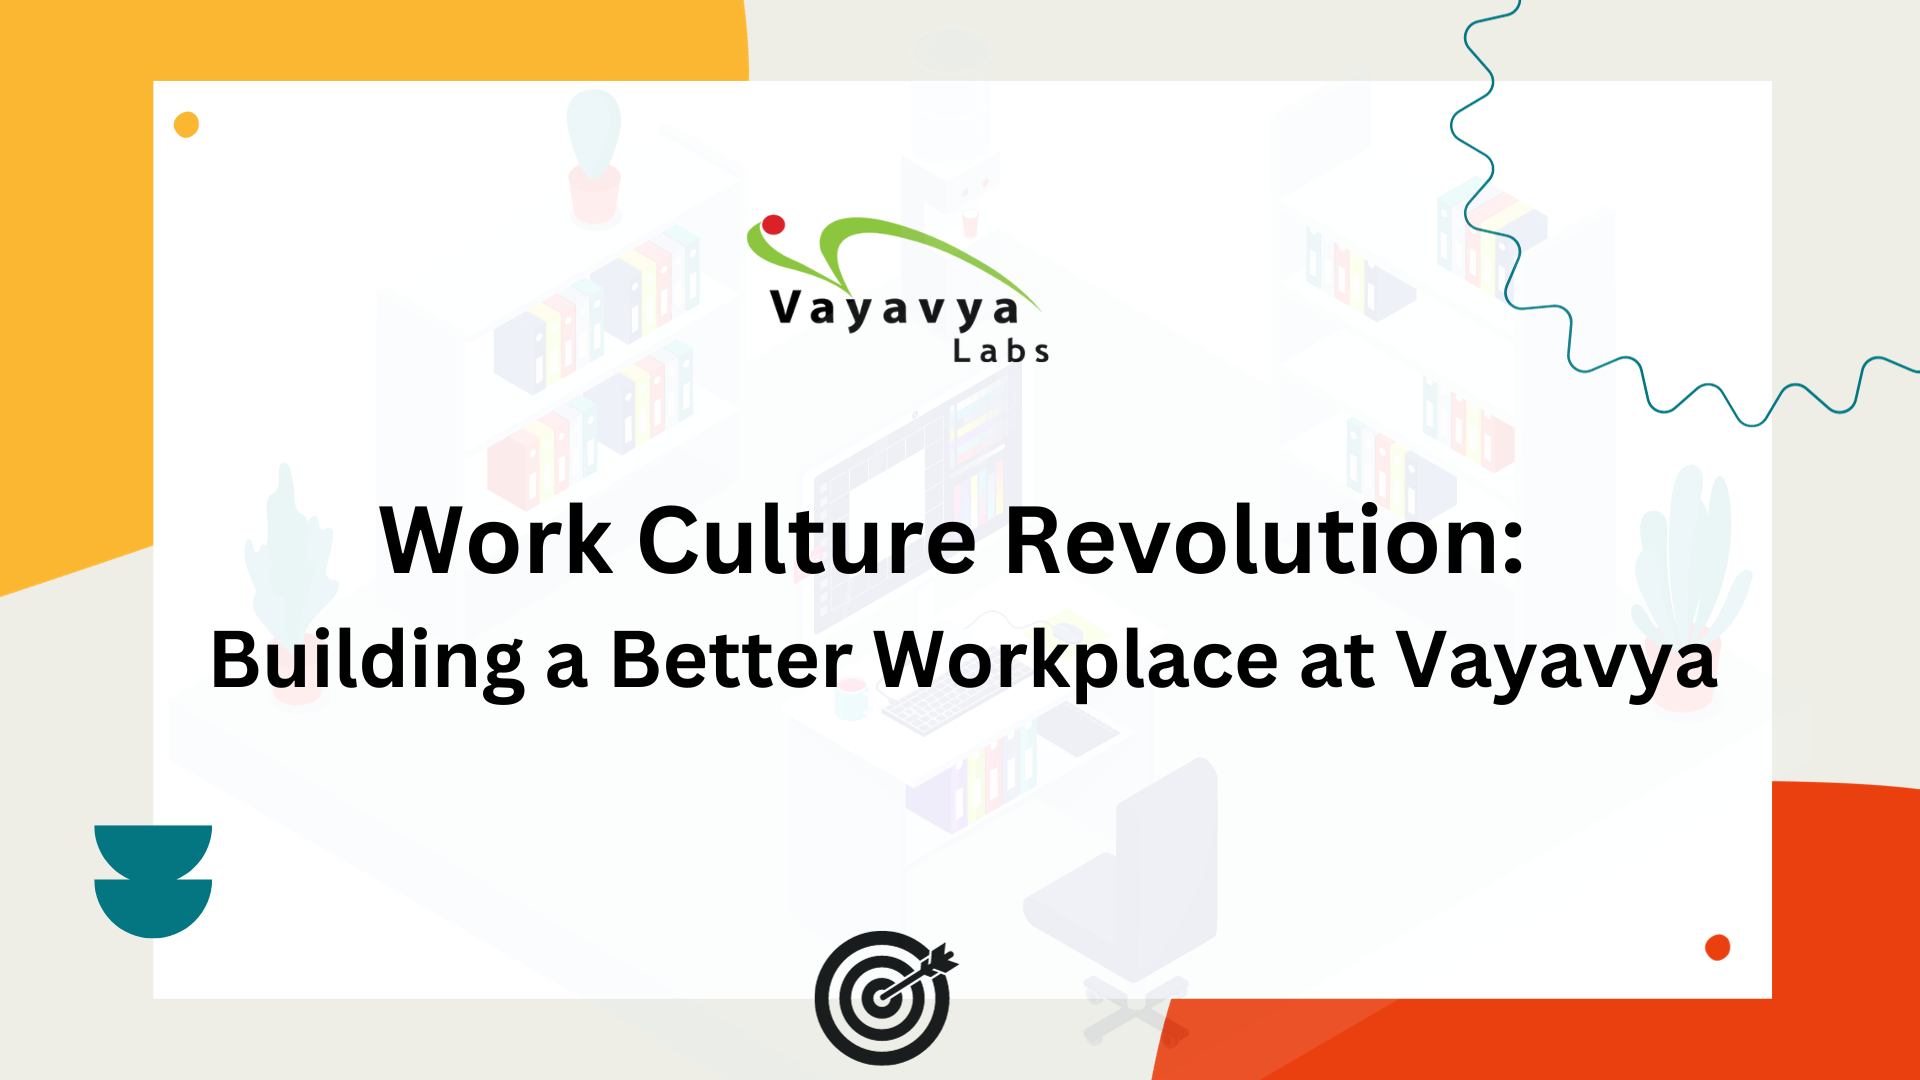 Work Culture at Vayavya